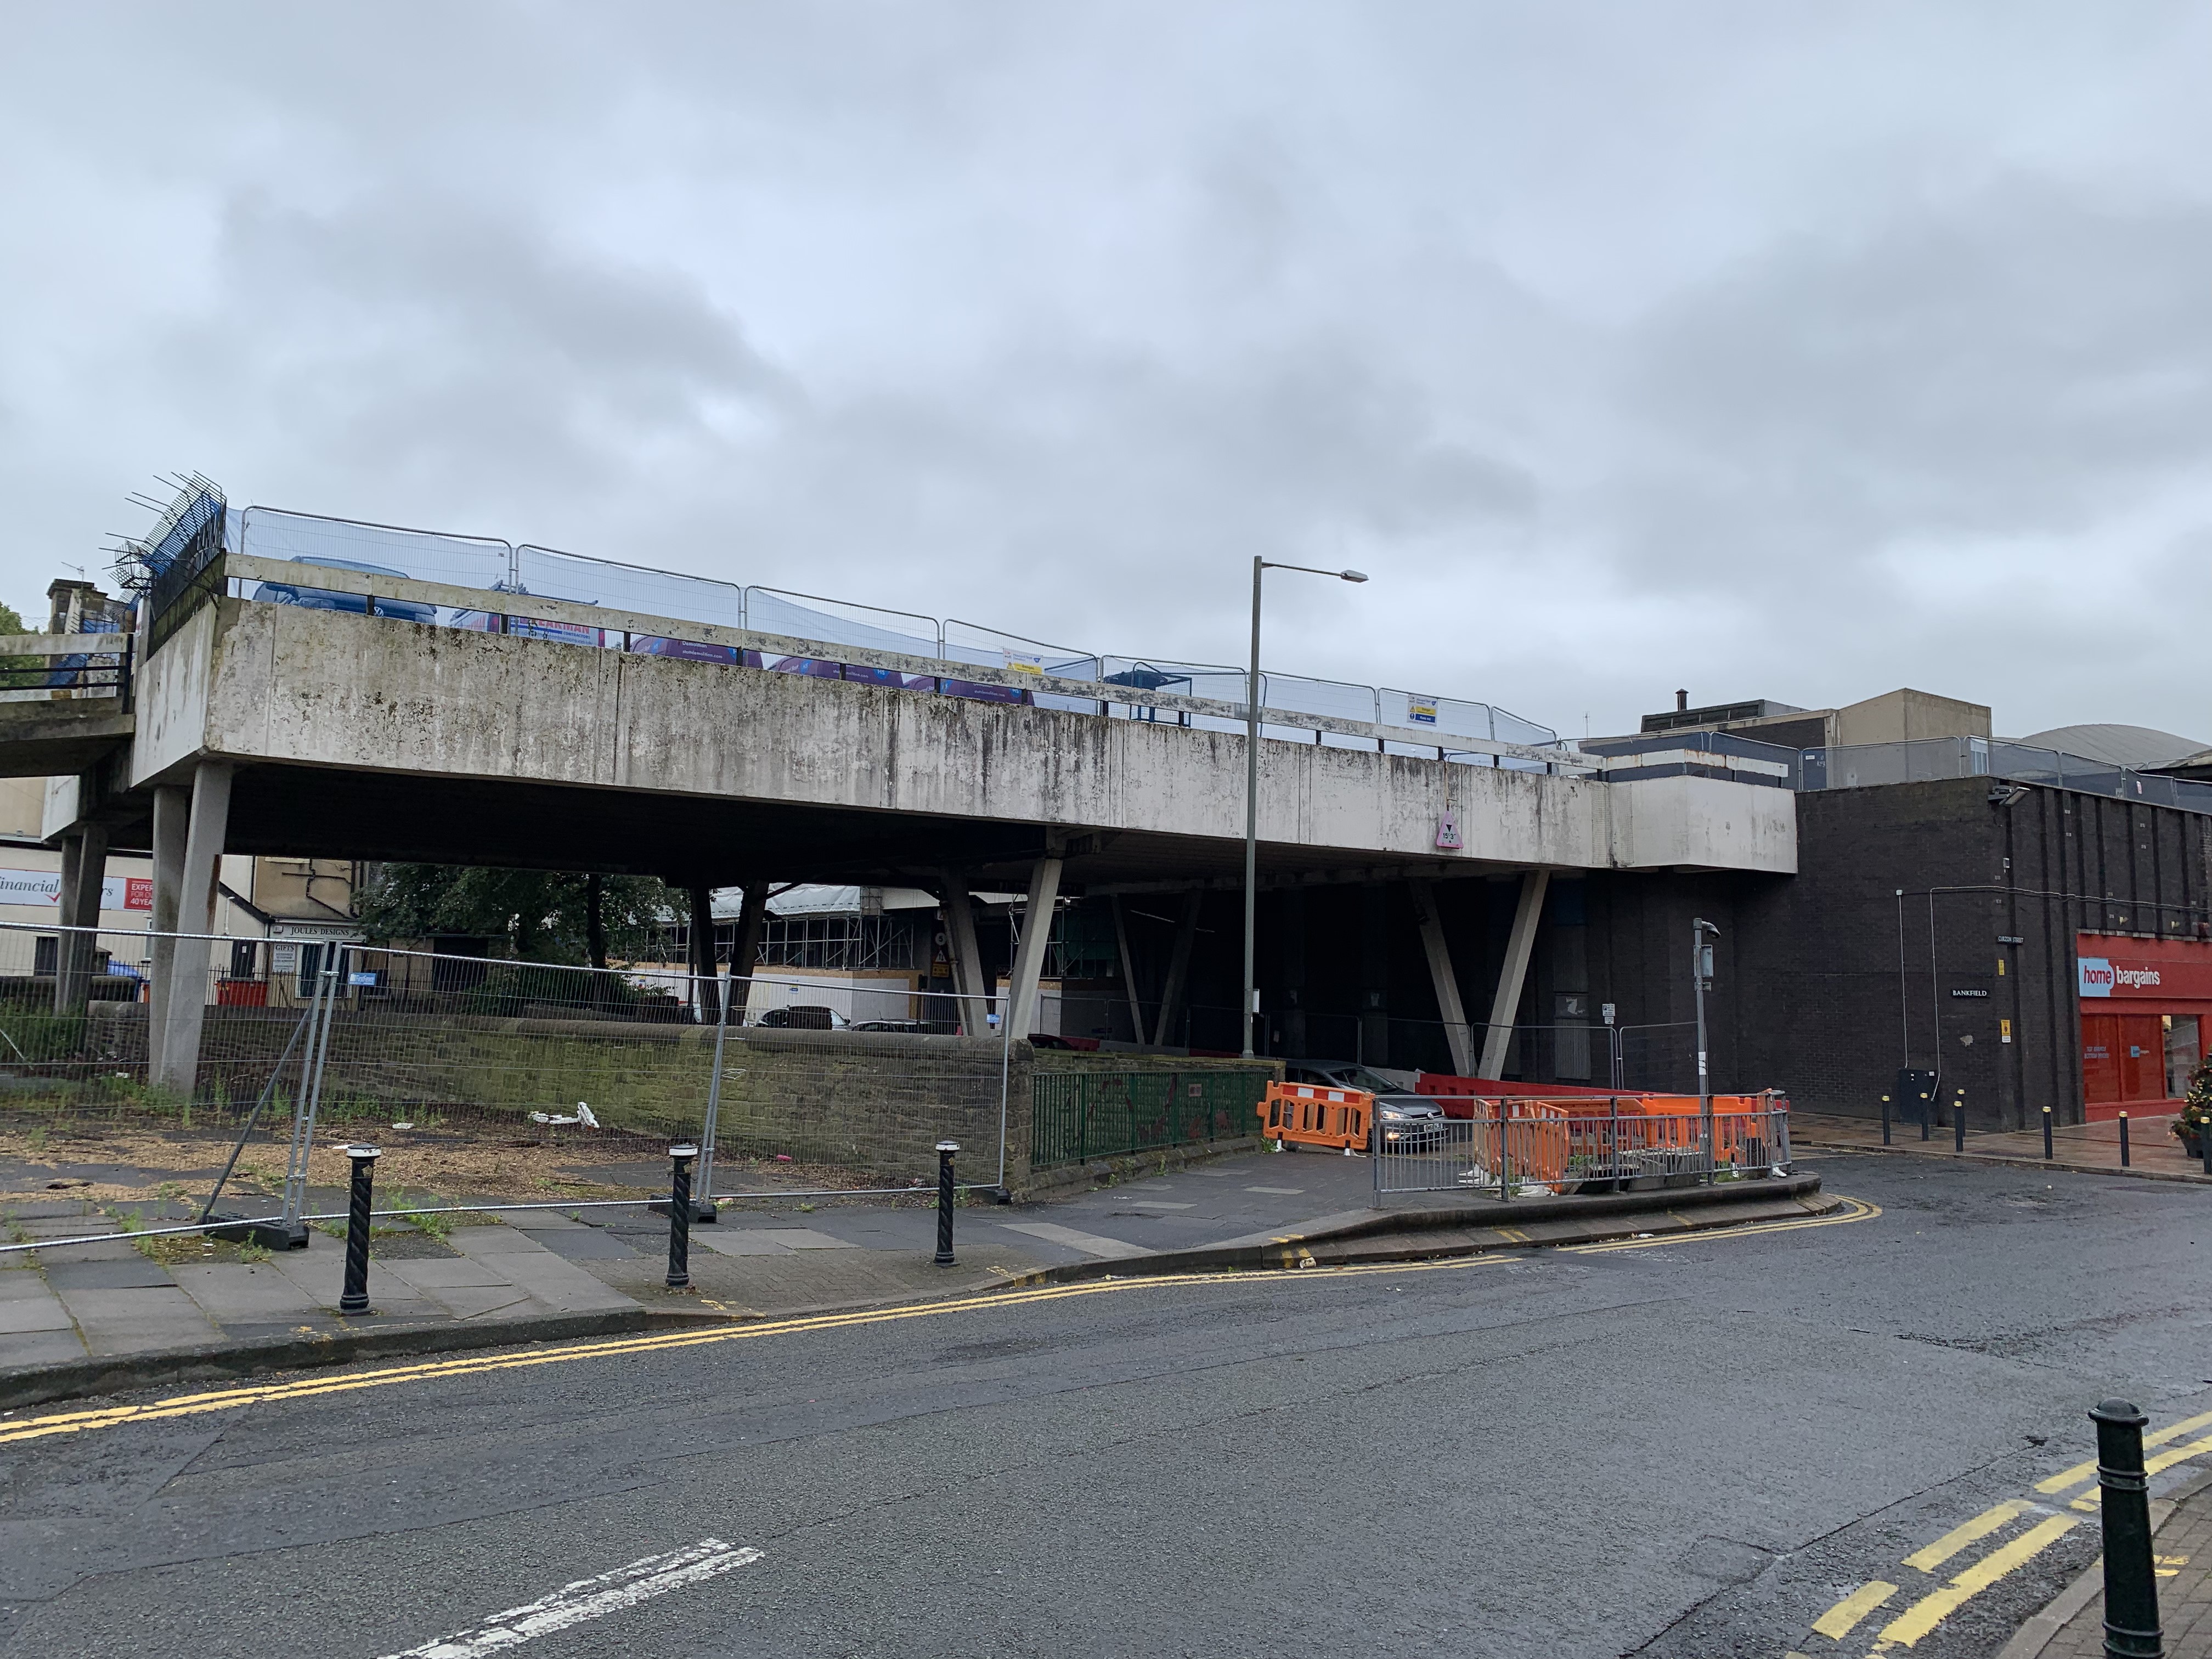 Market Bridge, Bankfield / Curzon Street, Burnley just before demolition - 2019